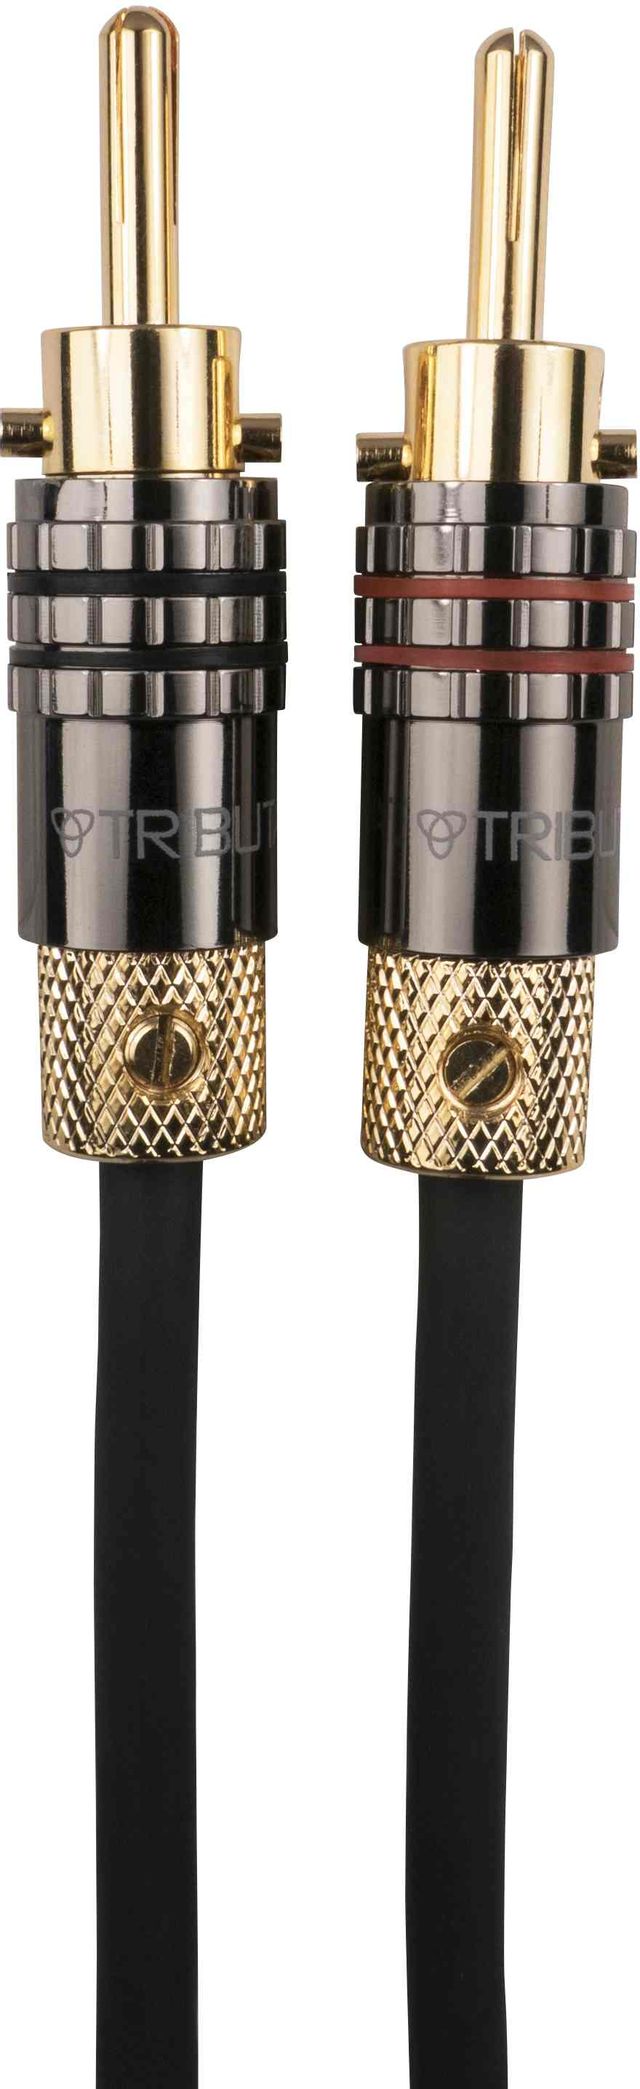 Tributaries® Series 8 8 Ft. Banana Plugs Speaker Cable